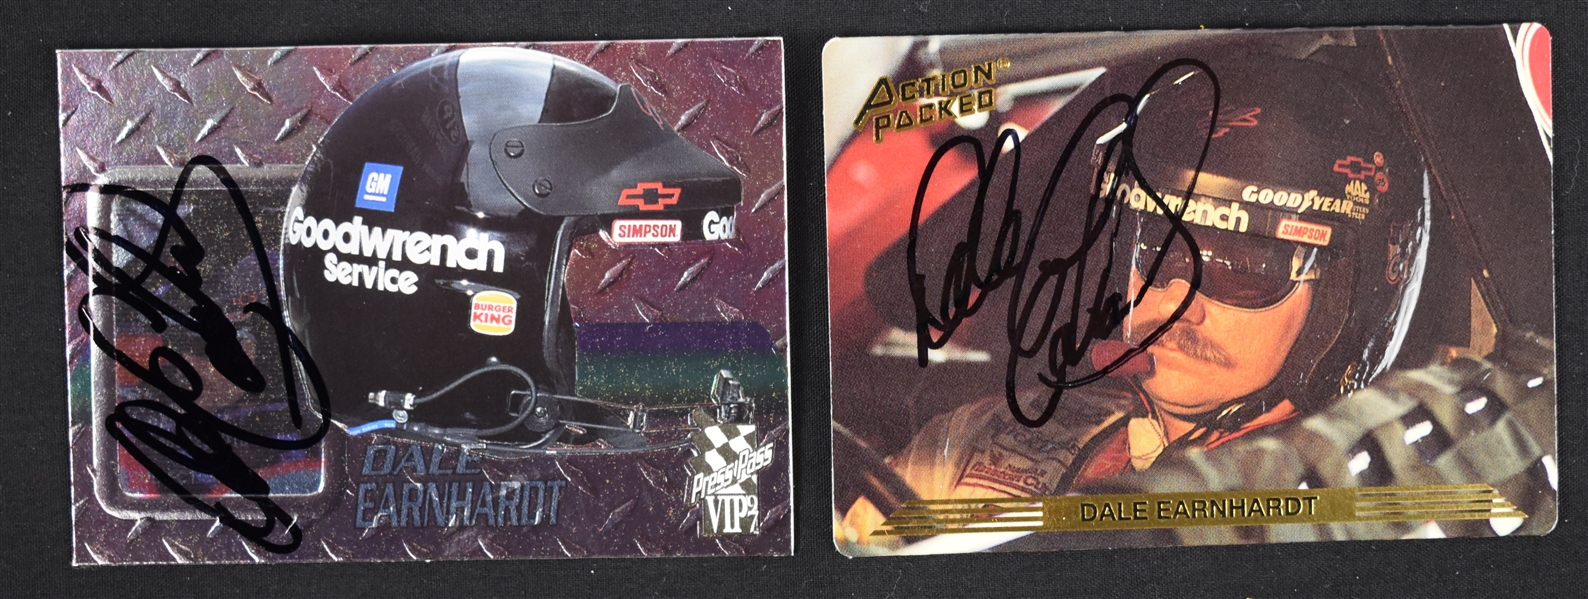 Dale Earnhardt Lot of 2 Autographed Cards 